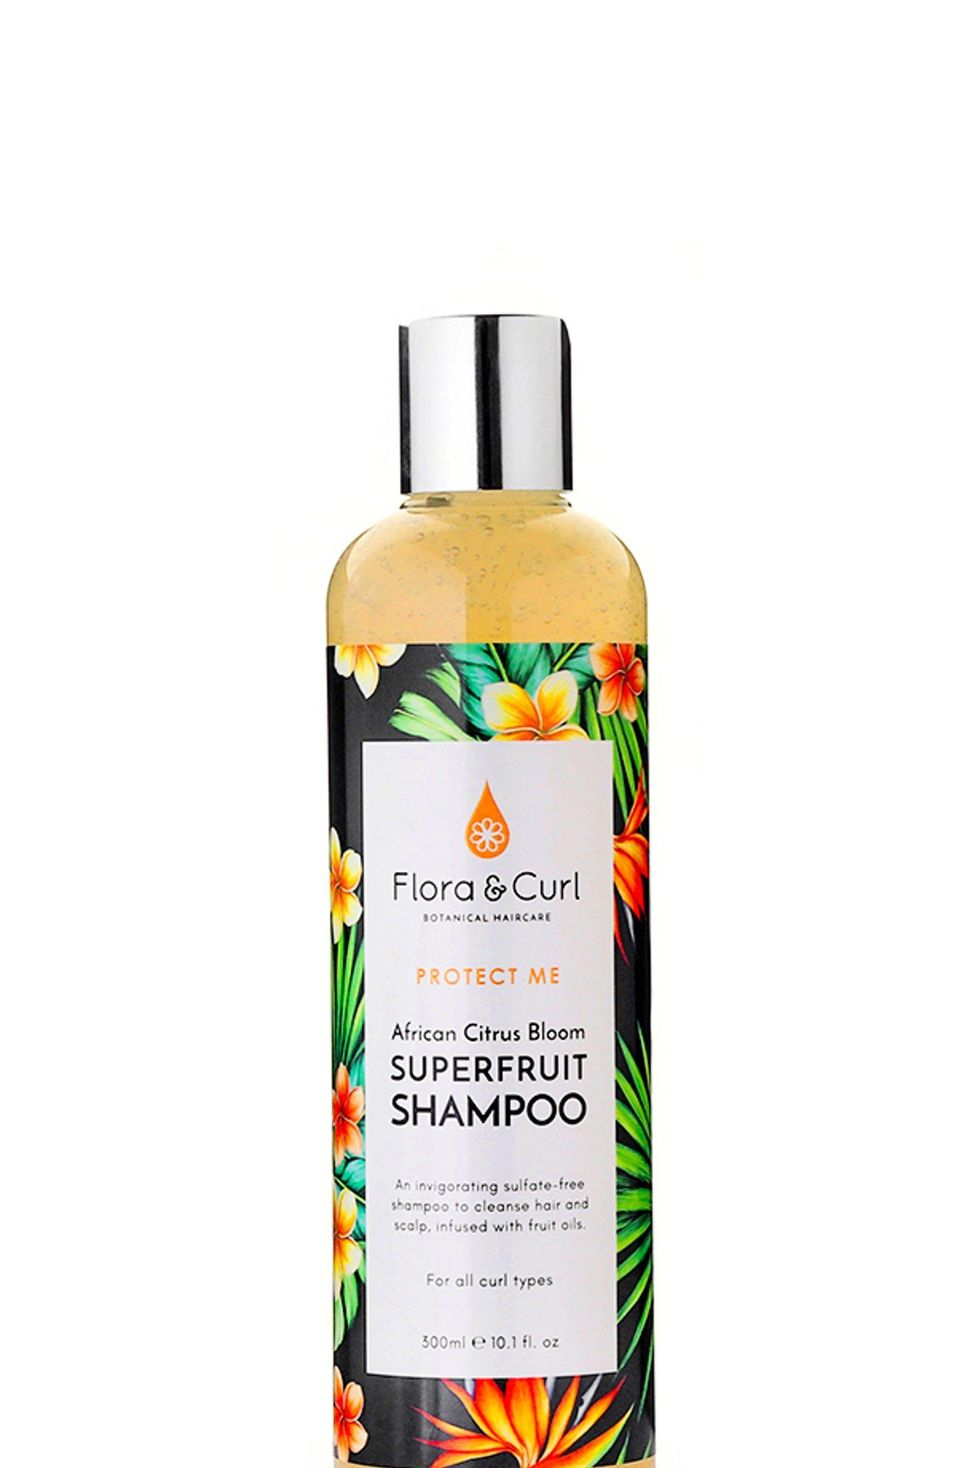 African Citrus Bloom Superfruit Shampoo